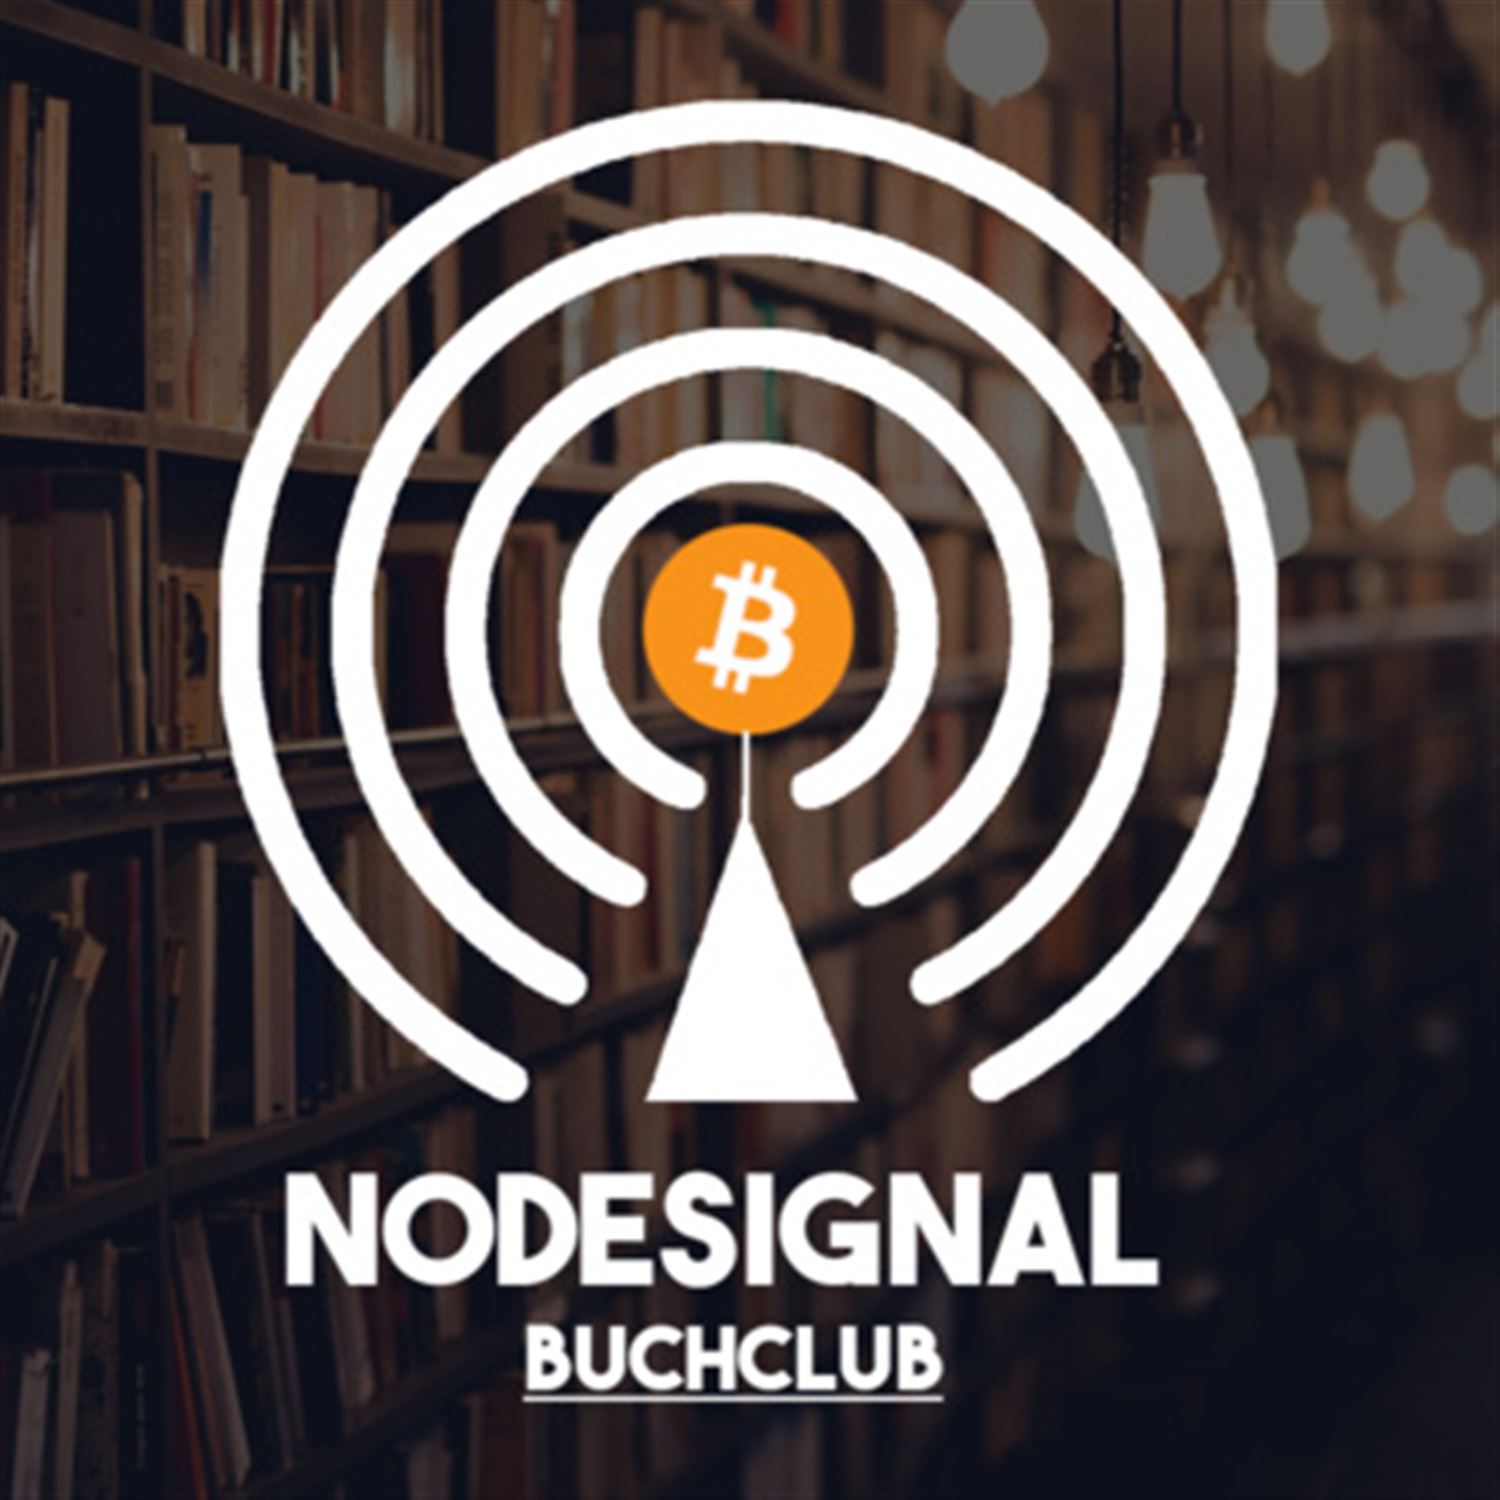 Nodesignal-Buchclub - E01 - Bitcoin begreifen - Bitcoin Basics